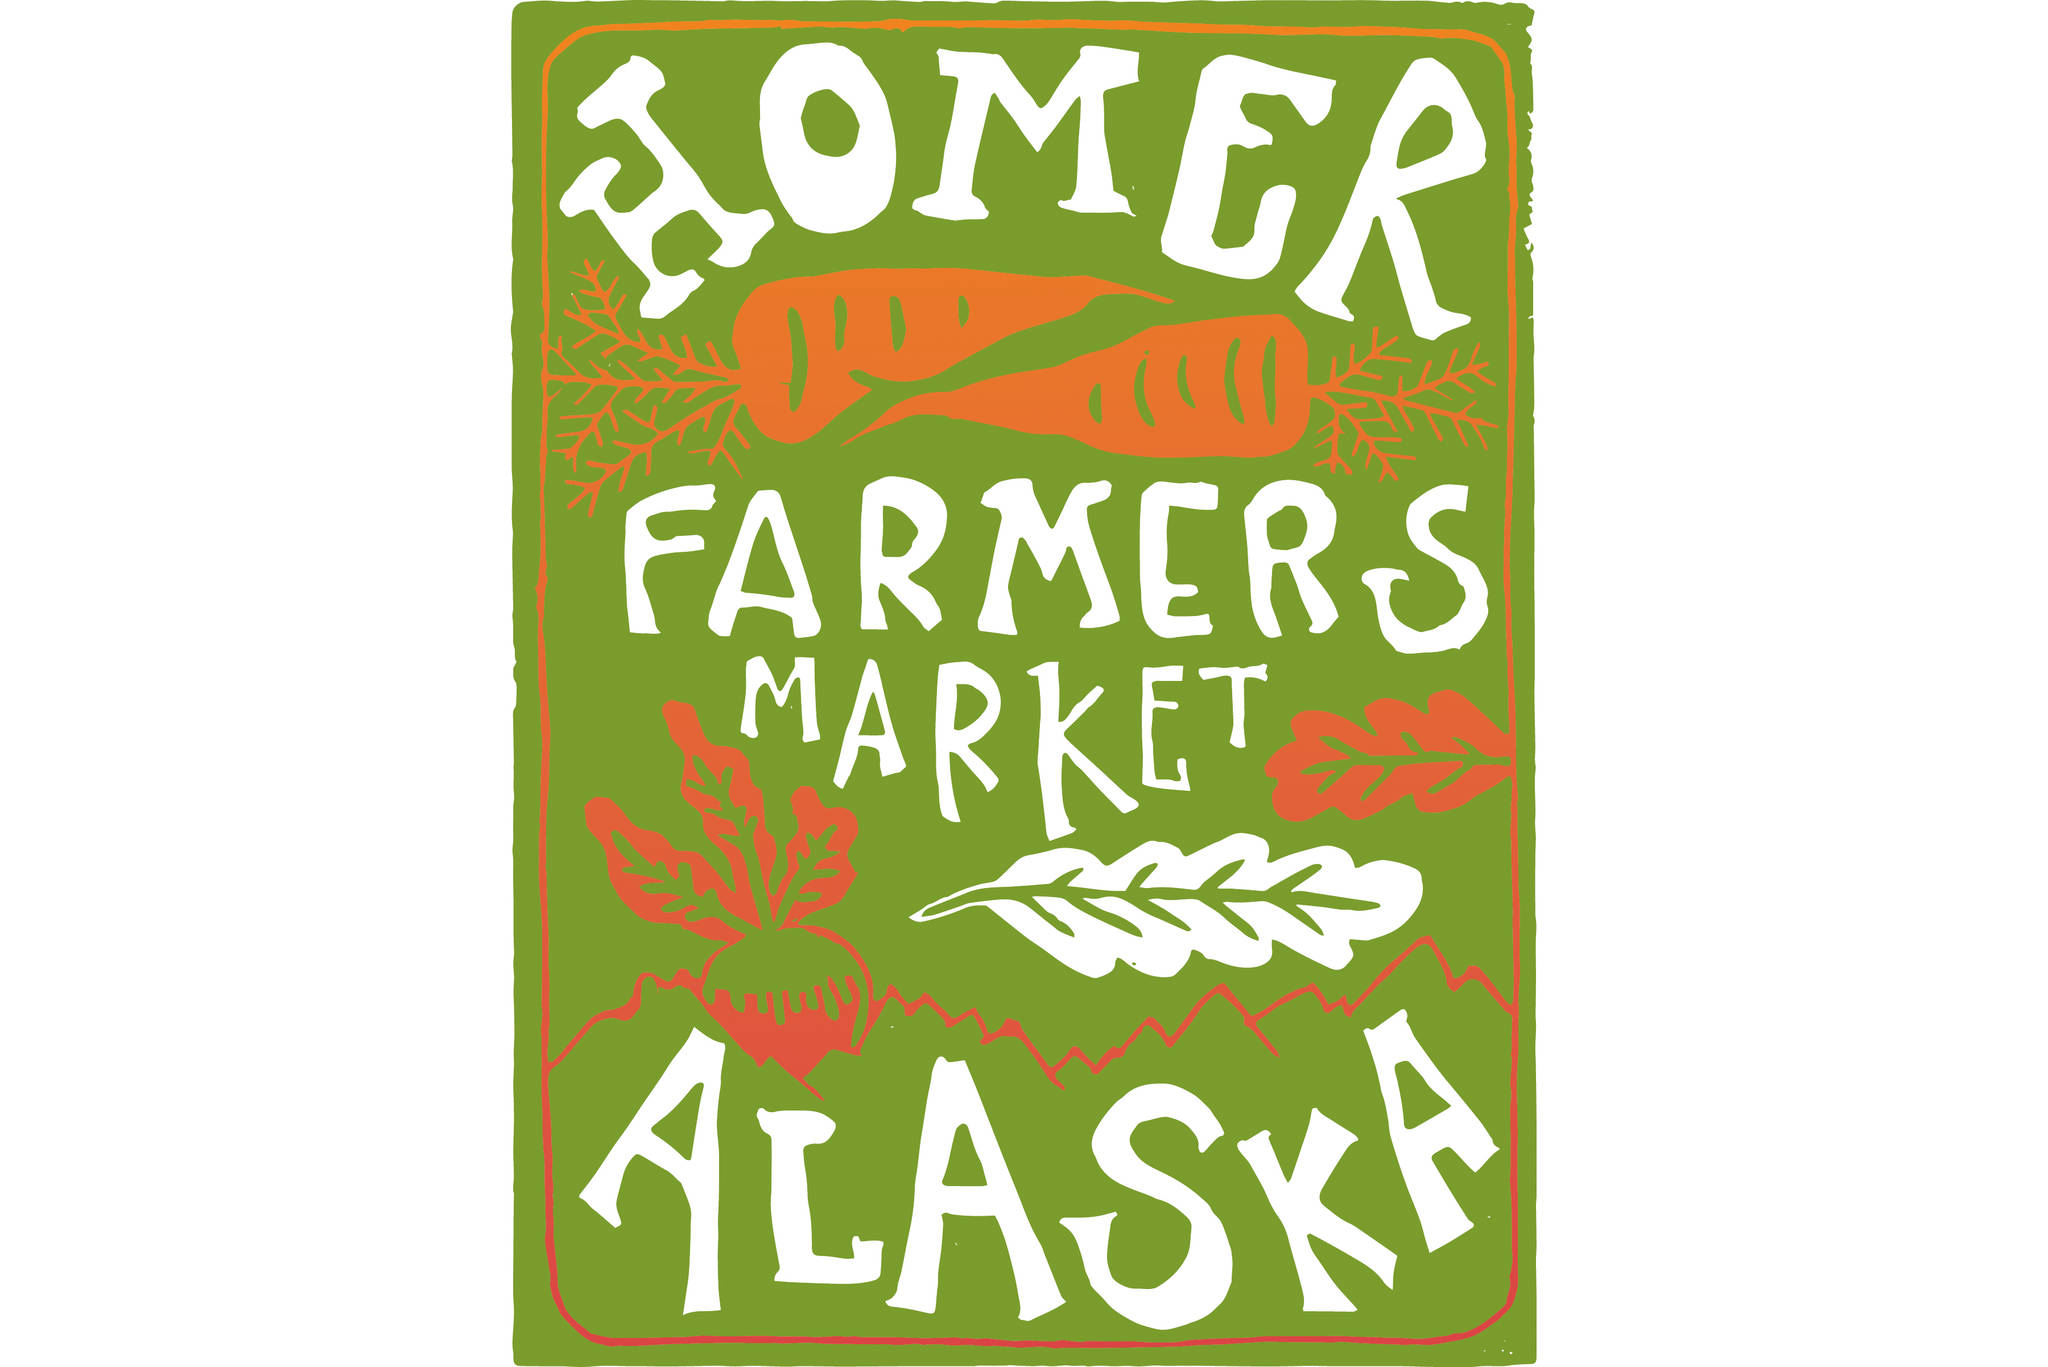 Homer Farmers Market: Rainy Market brings people together